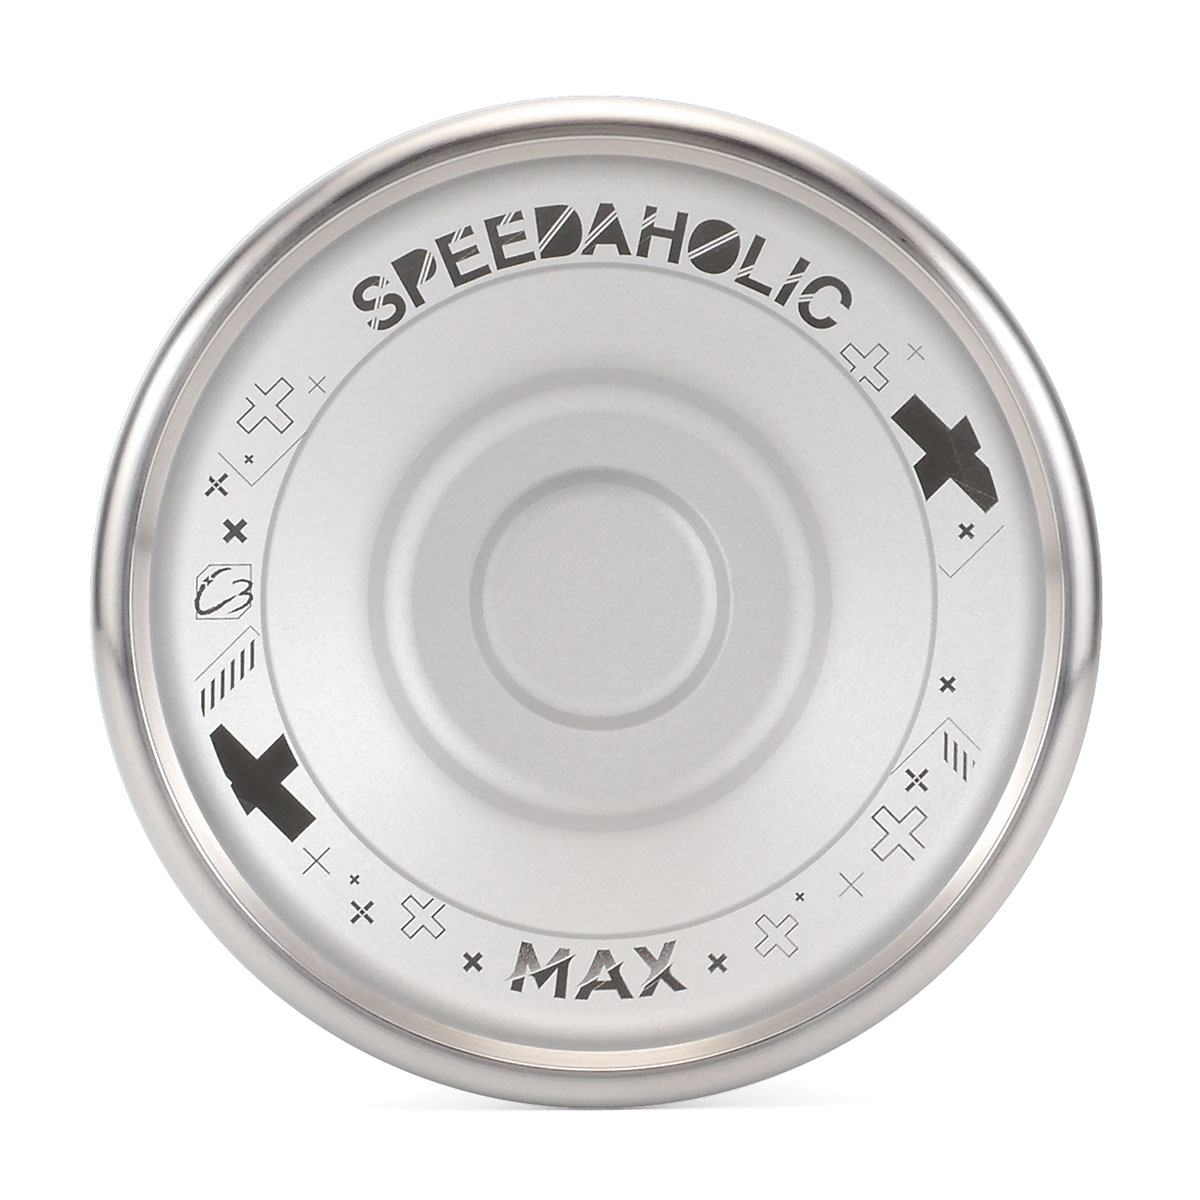 SPINGEAR - C3yoyodesign SPEEDAHOLIC MAX